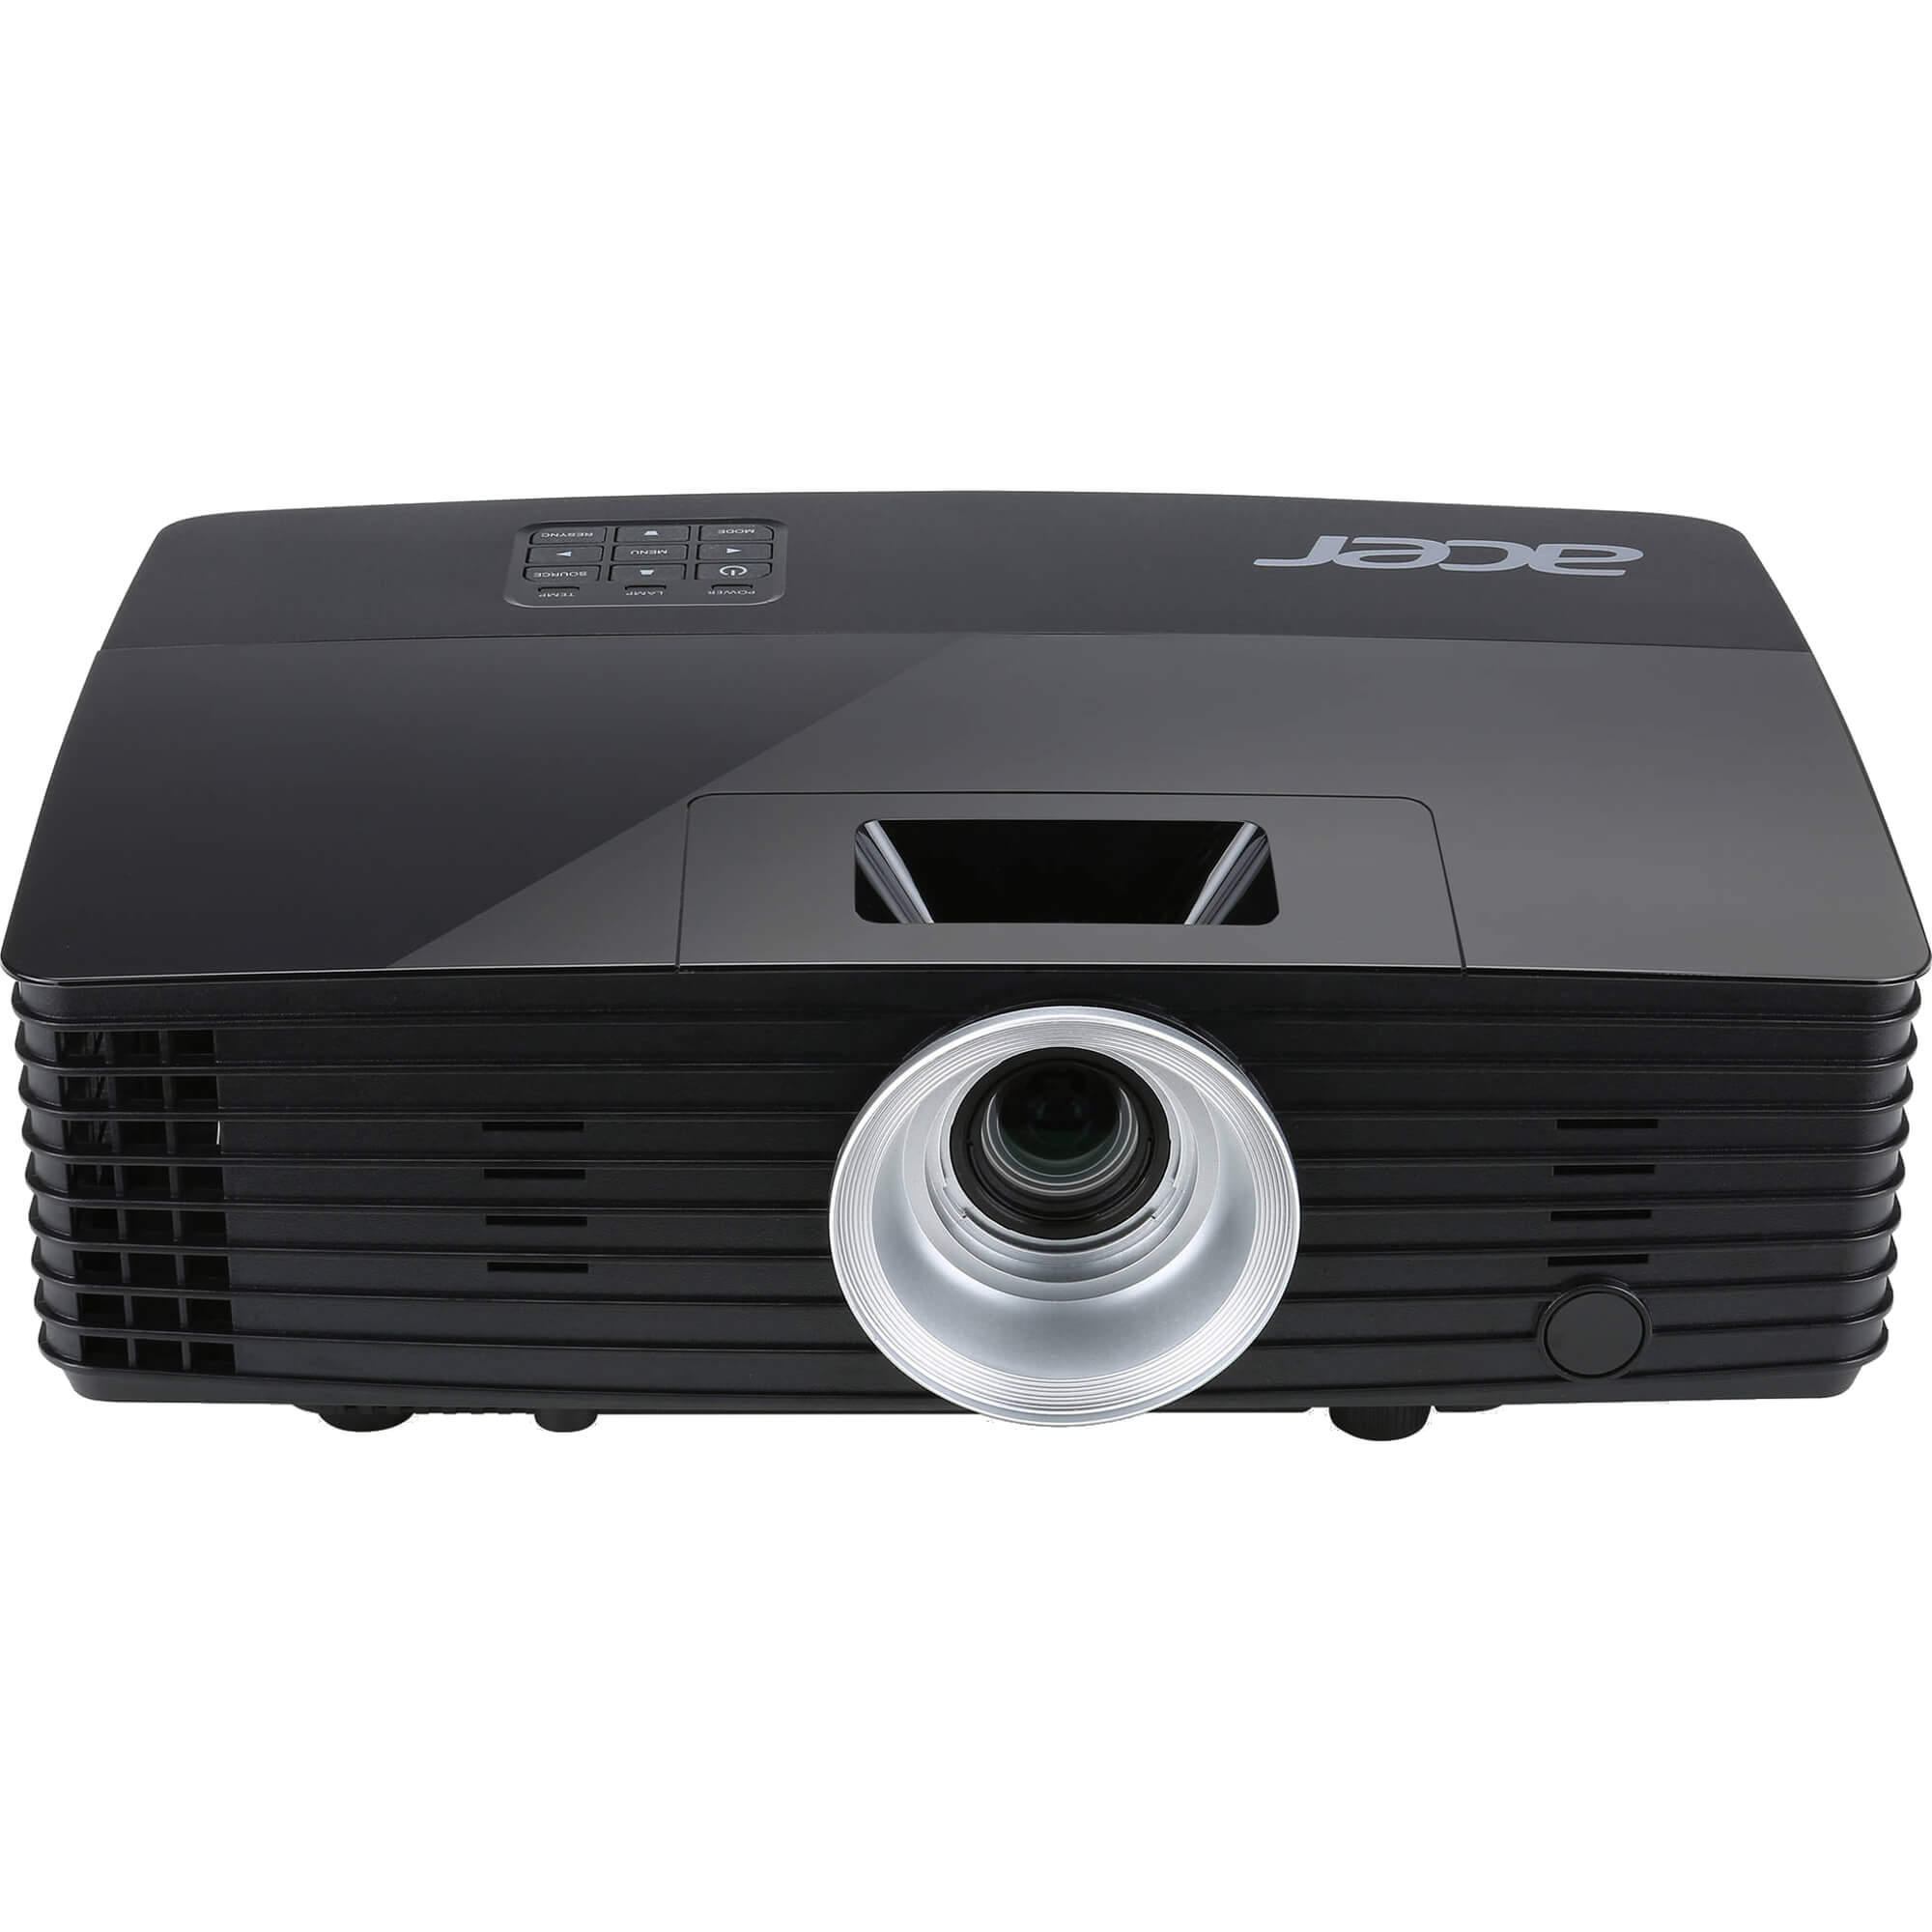  Videoproiector Acer P1285, XGA, 3300 lumeni 